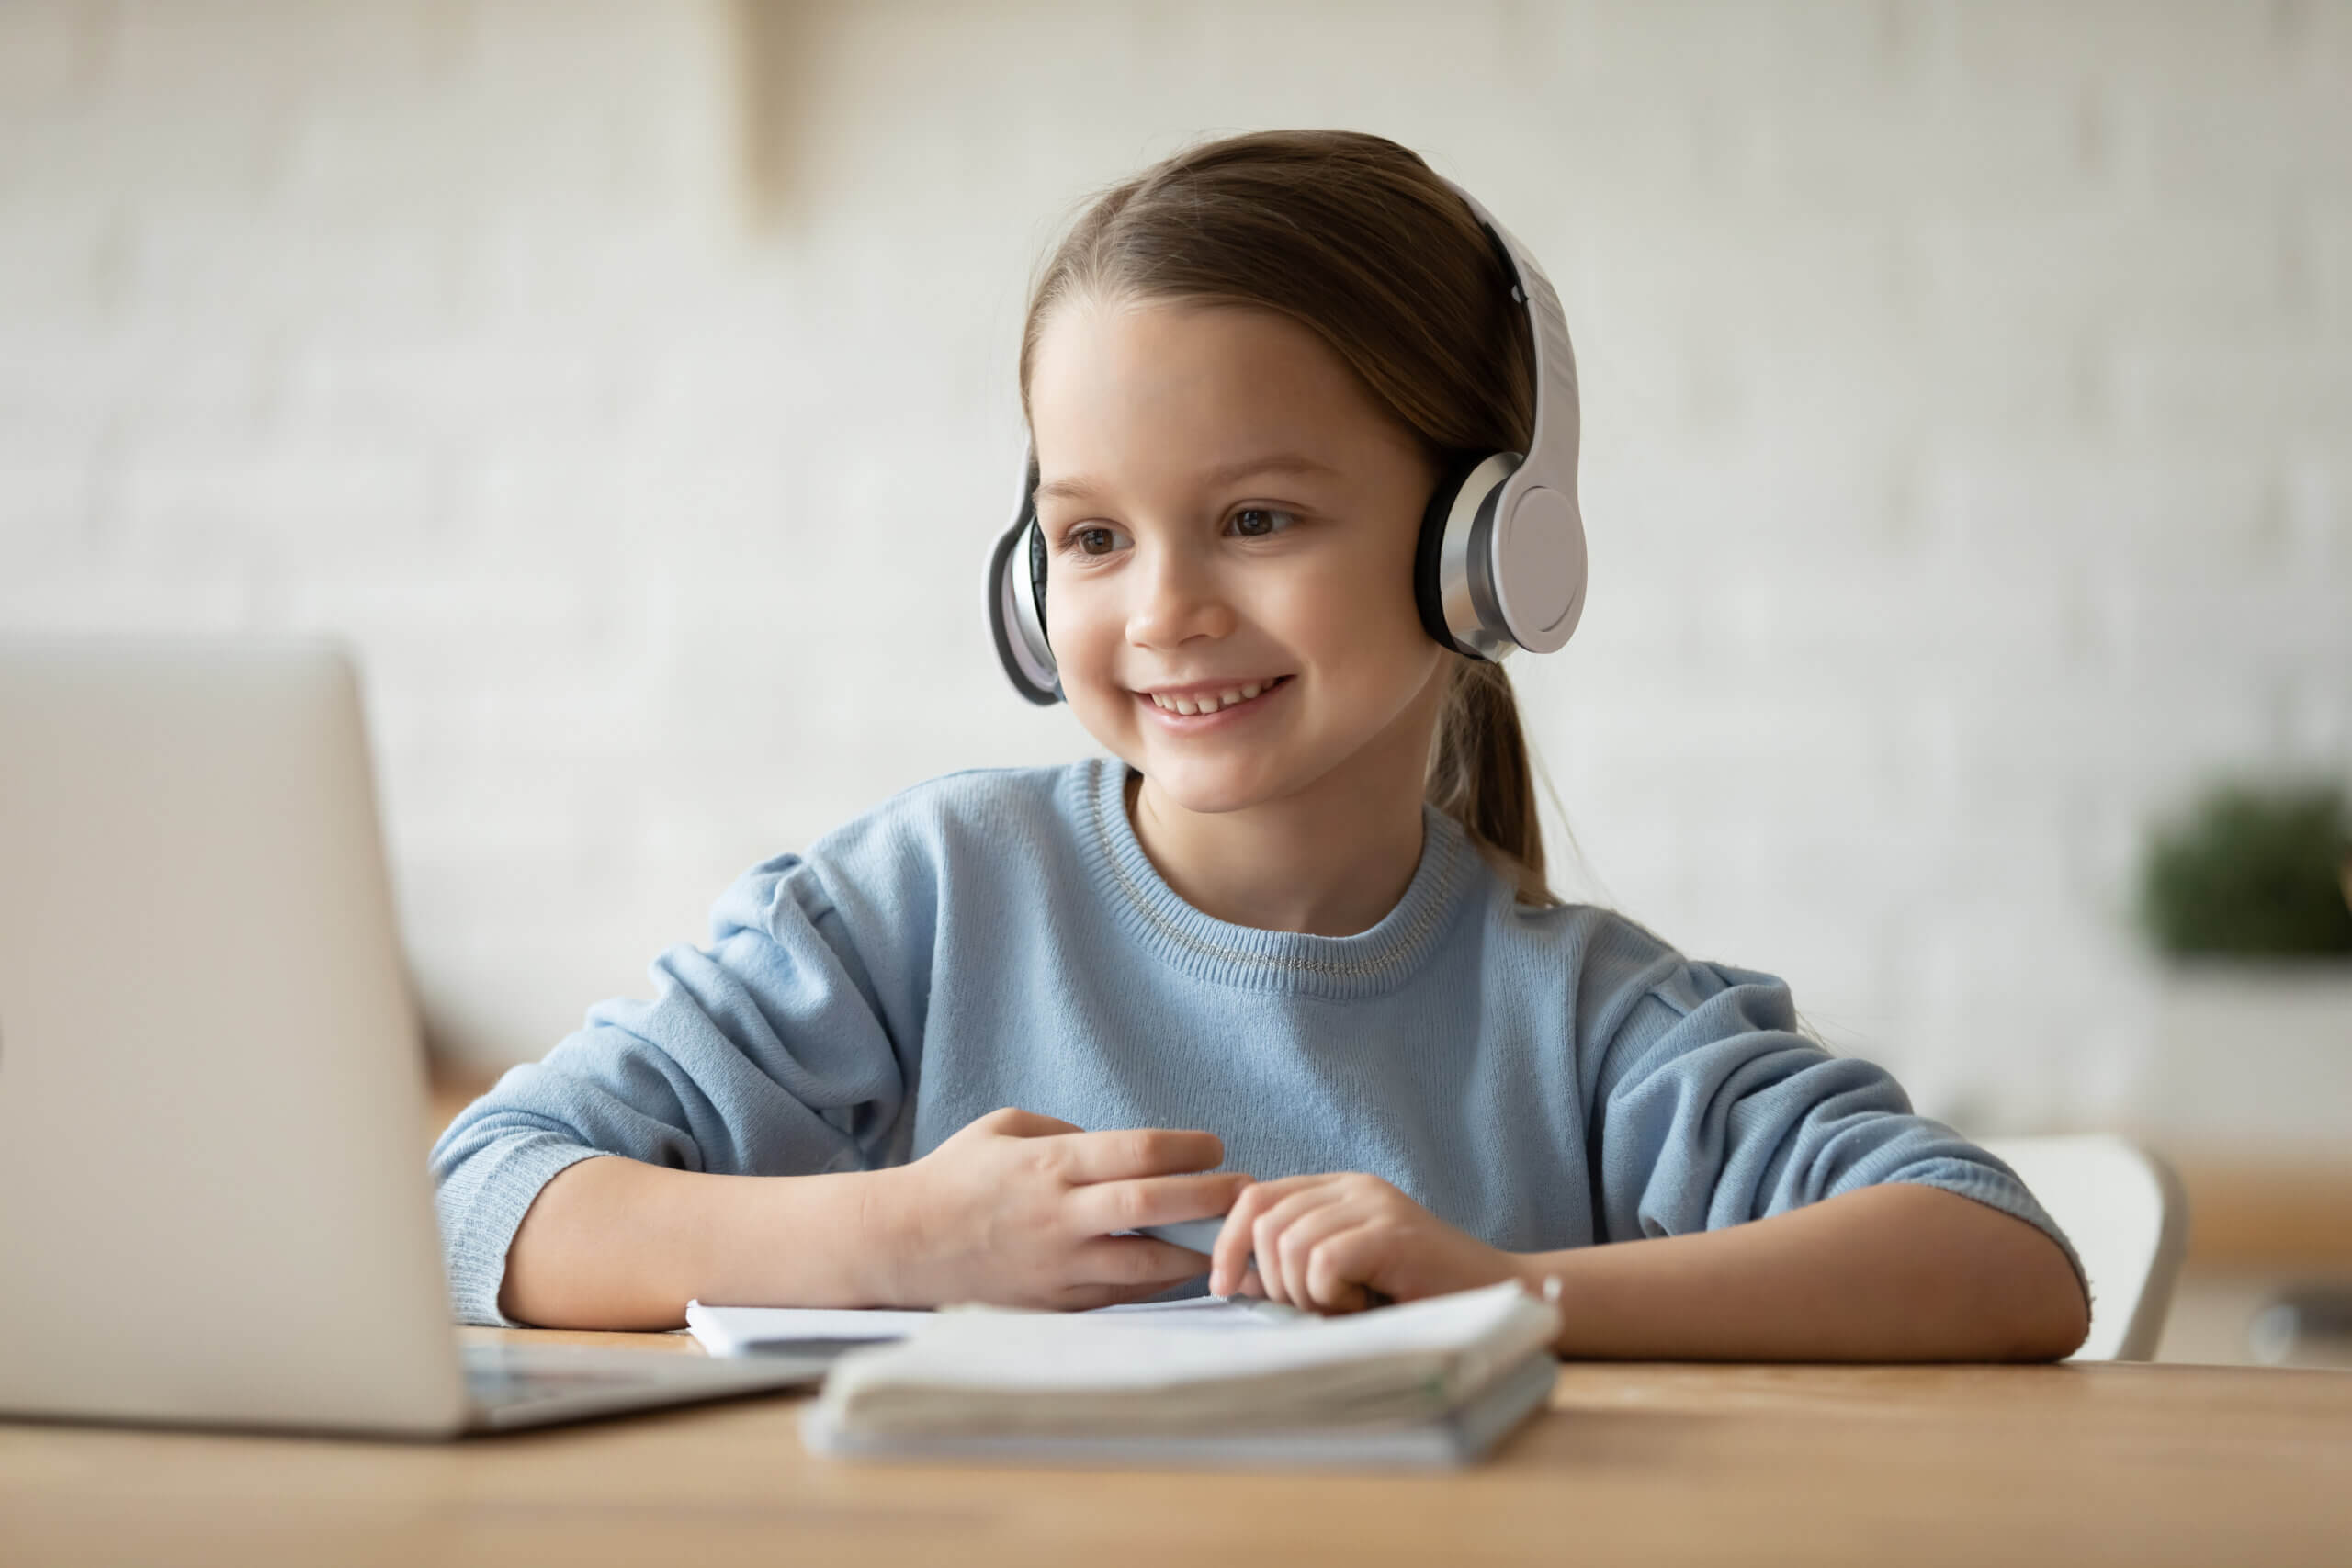 Little schoolgirl learning school subject distantly using pc and headphones.